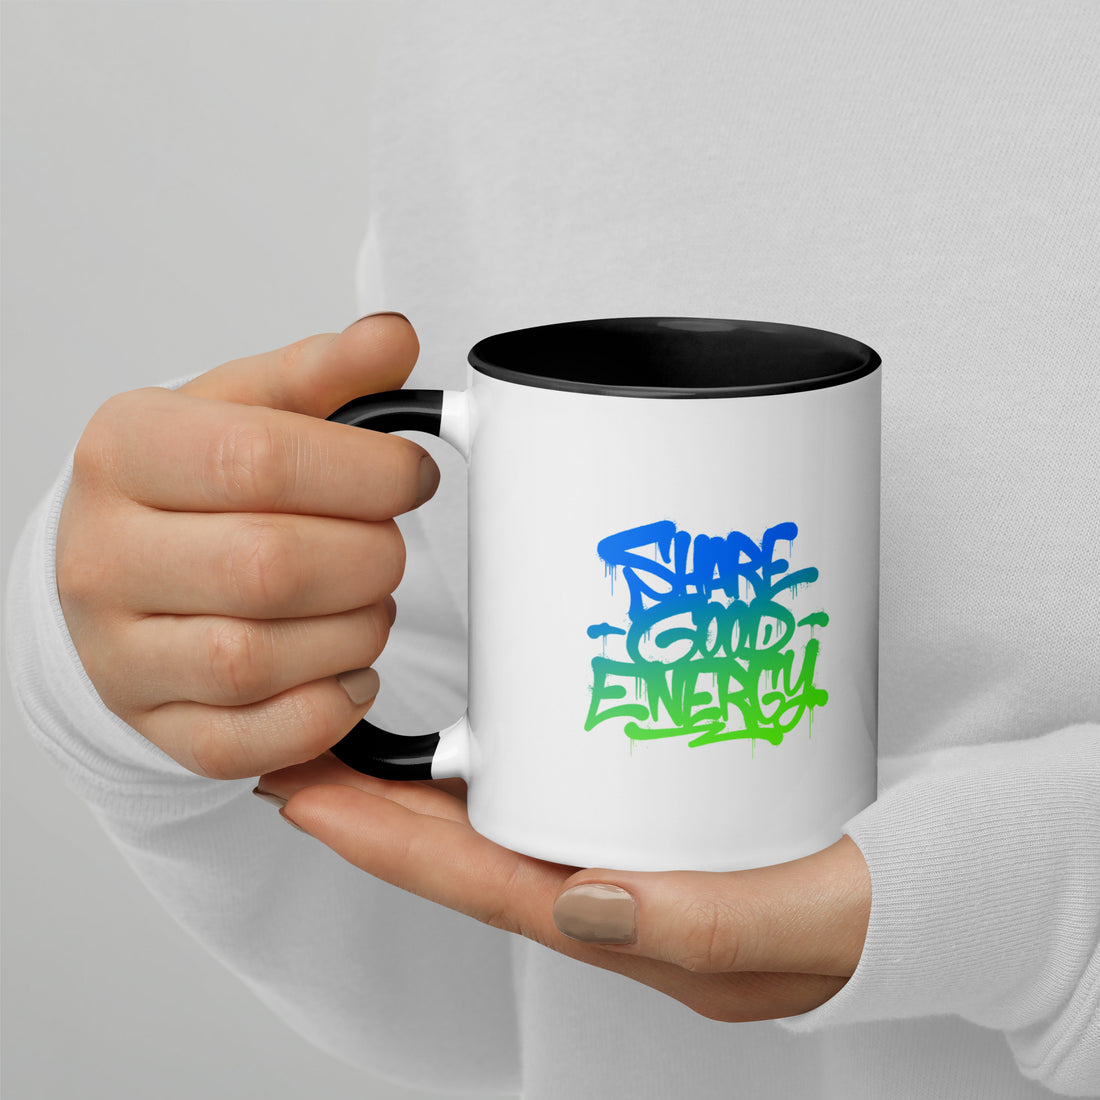 Share Good Energy Drip - White Mug with Color Inside